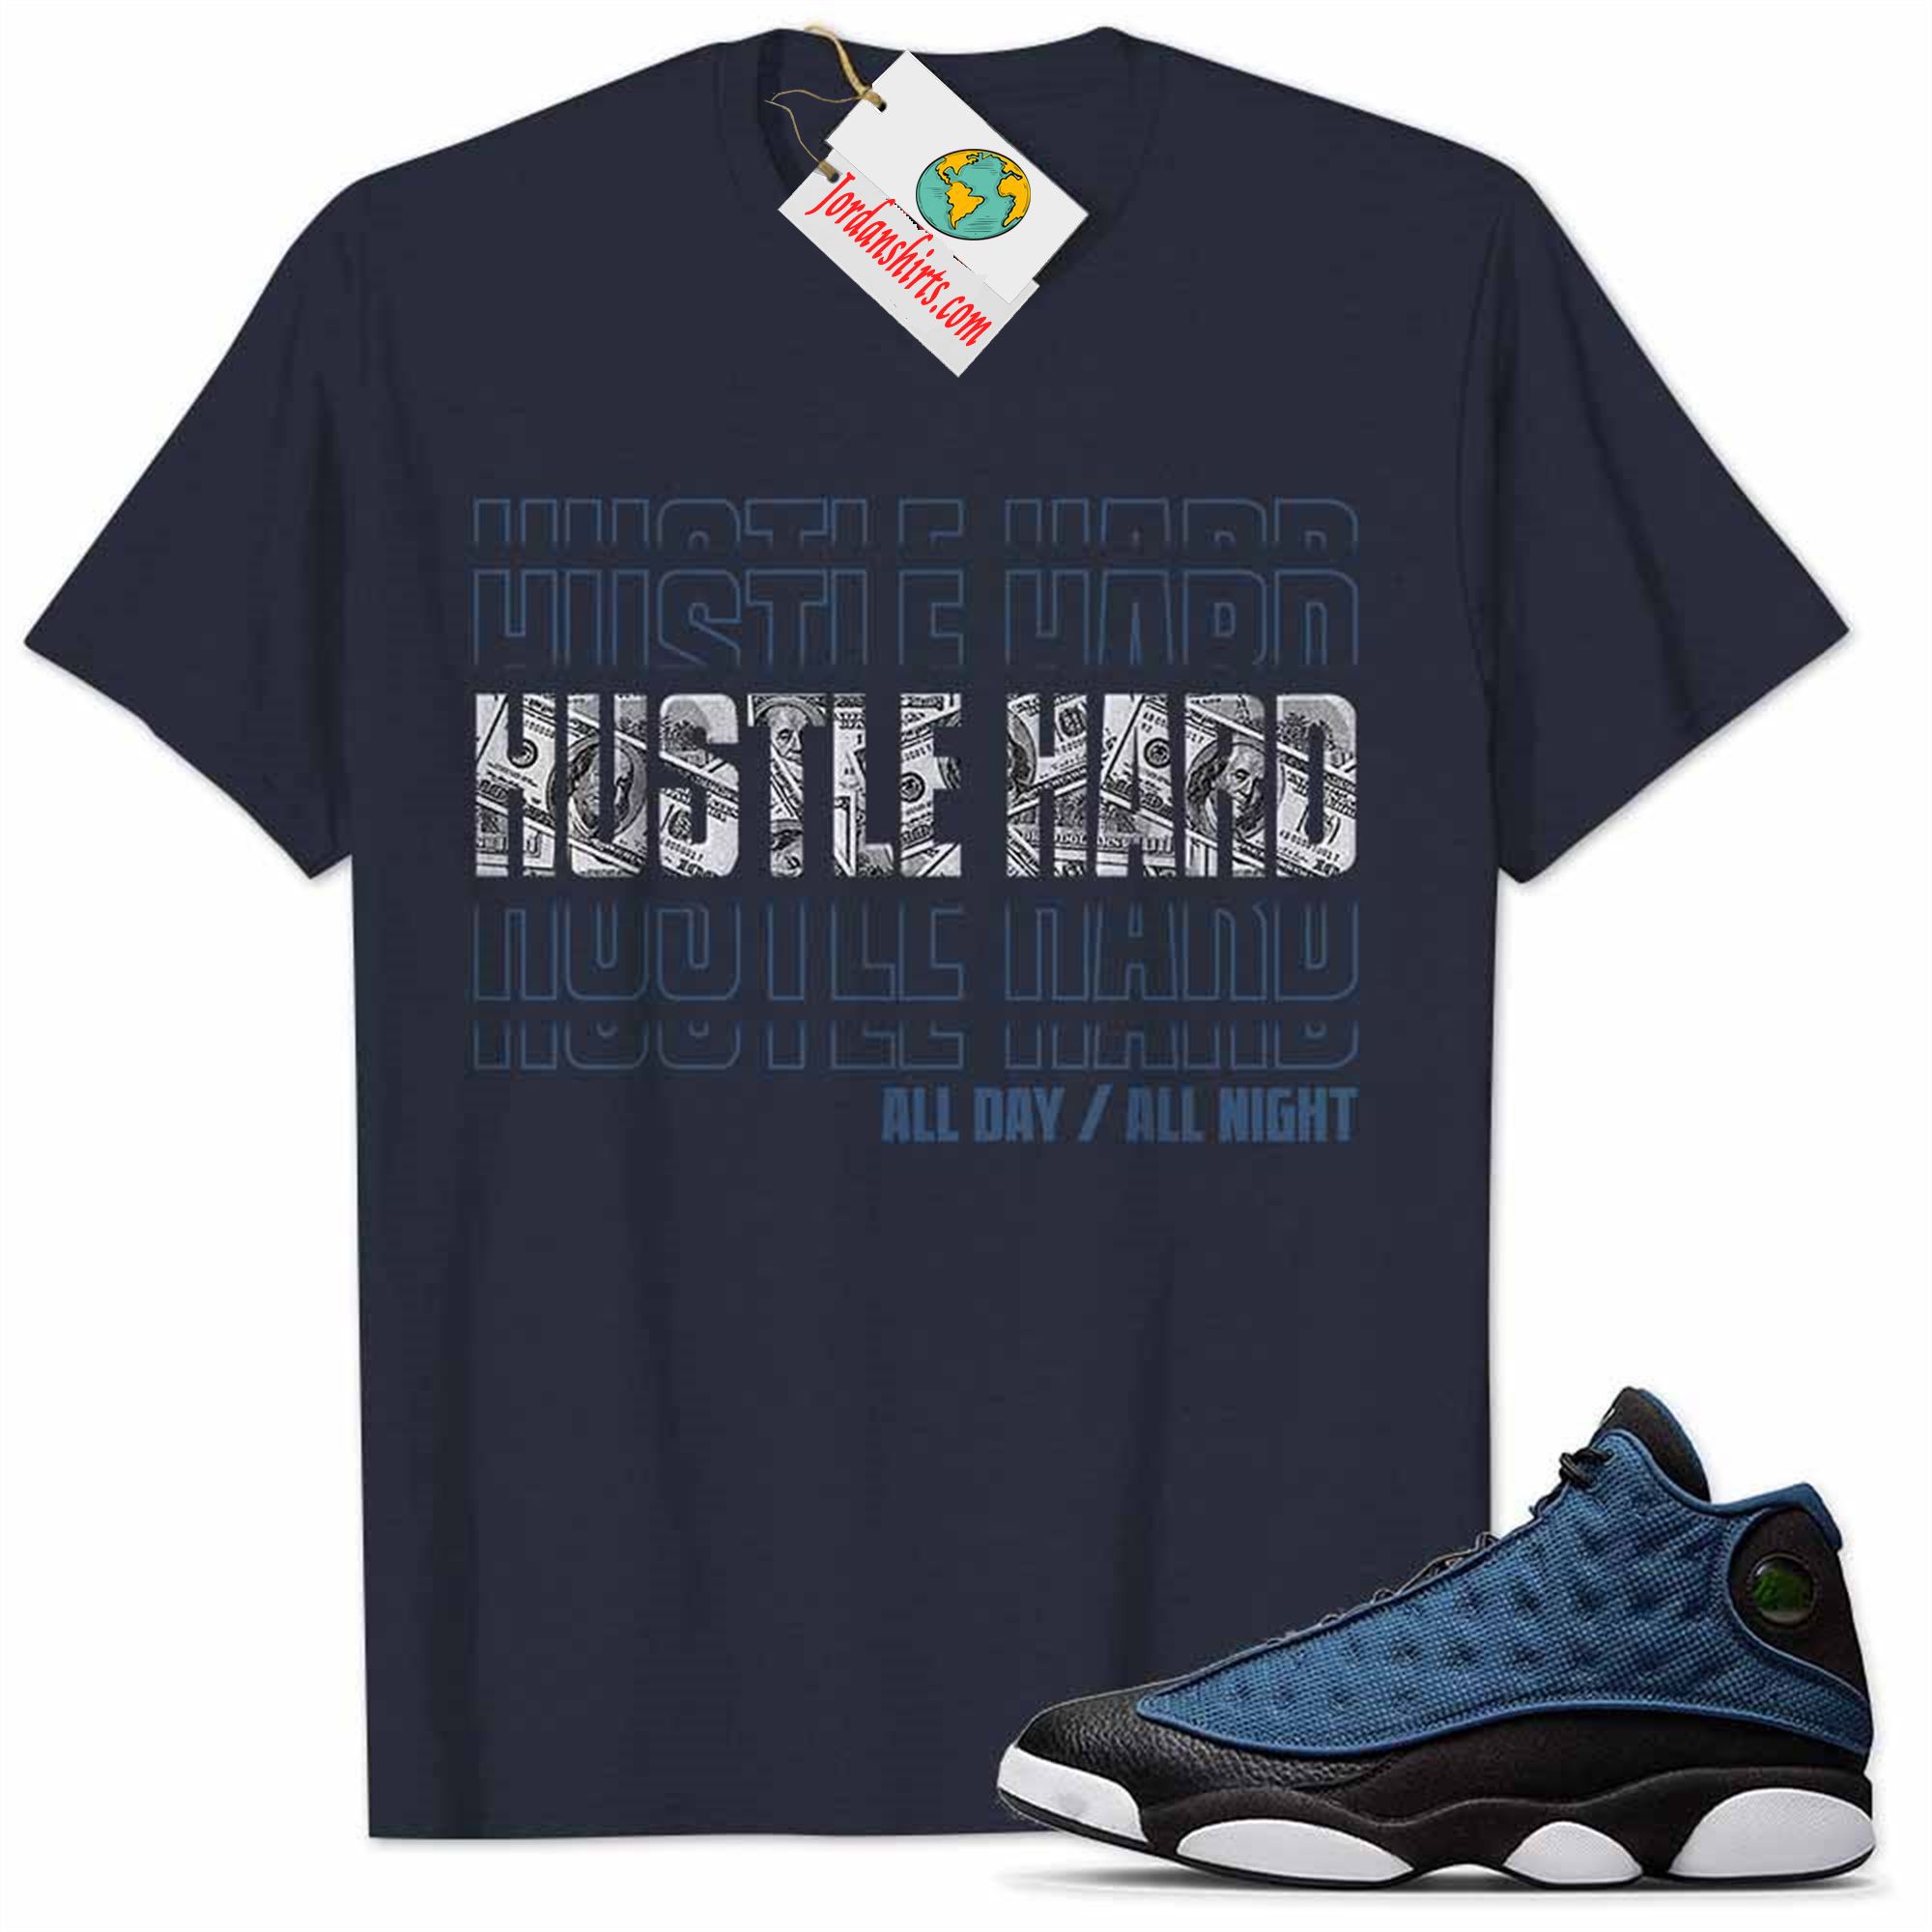 Jordan 13 Shirt, Jordan 13 Brave Blue Shirt Hustle Hard All Day All Night Dollar Money Navy Plus Size Up To 5xl